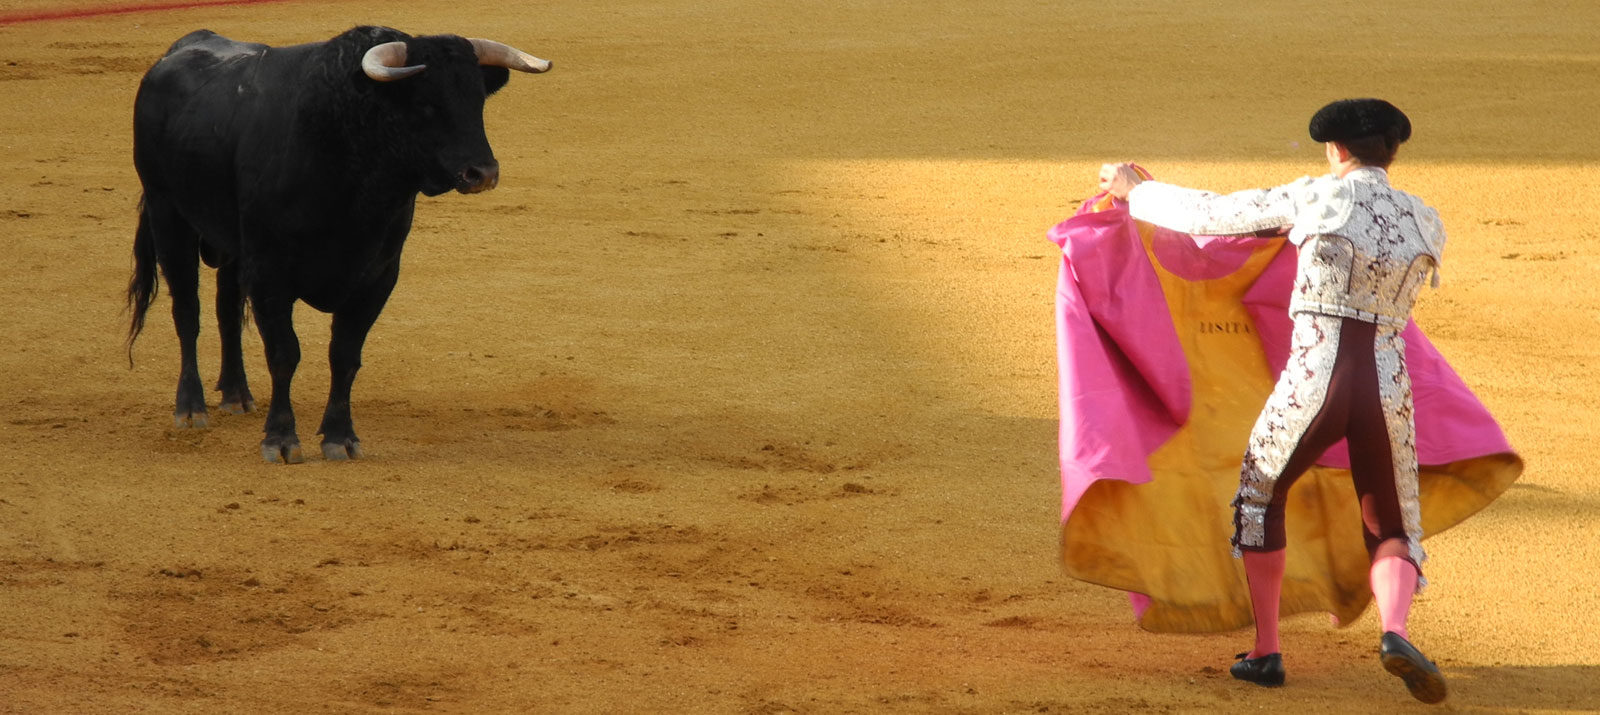 Bull and matador in Madrid